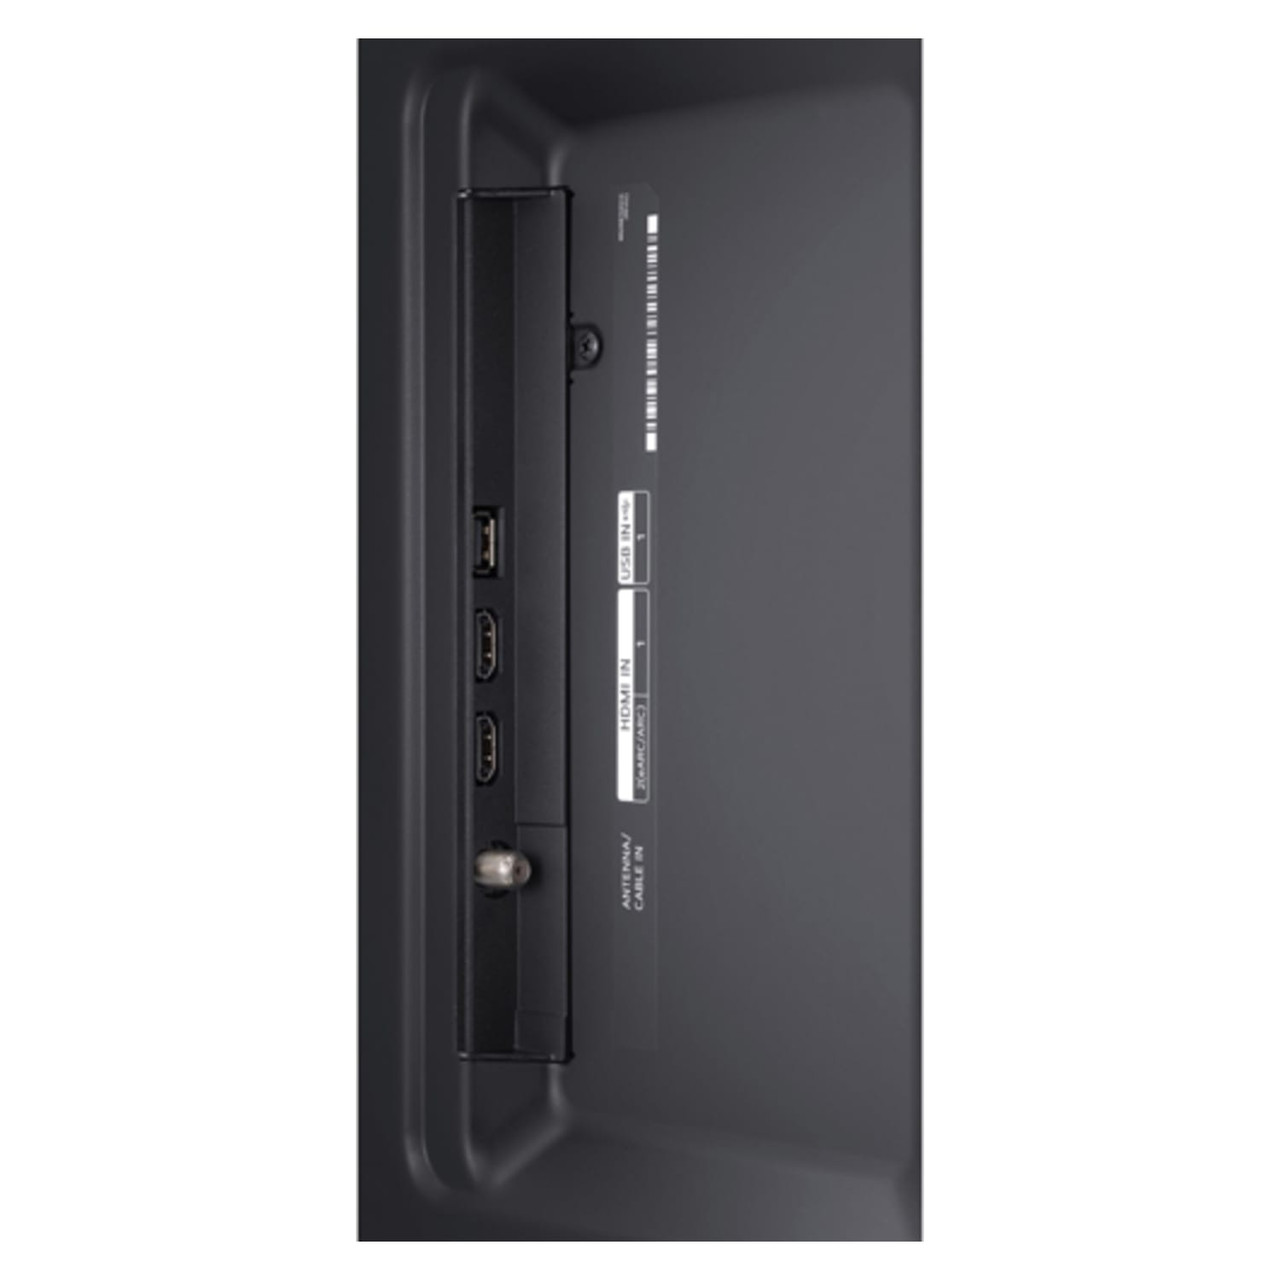 Pantalla LG 60 Smart TV 4K UHD Bluetooth HDMI USB HDR AI ThinQ